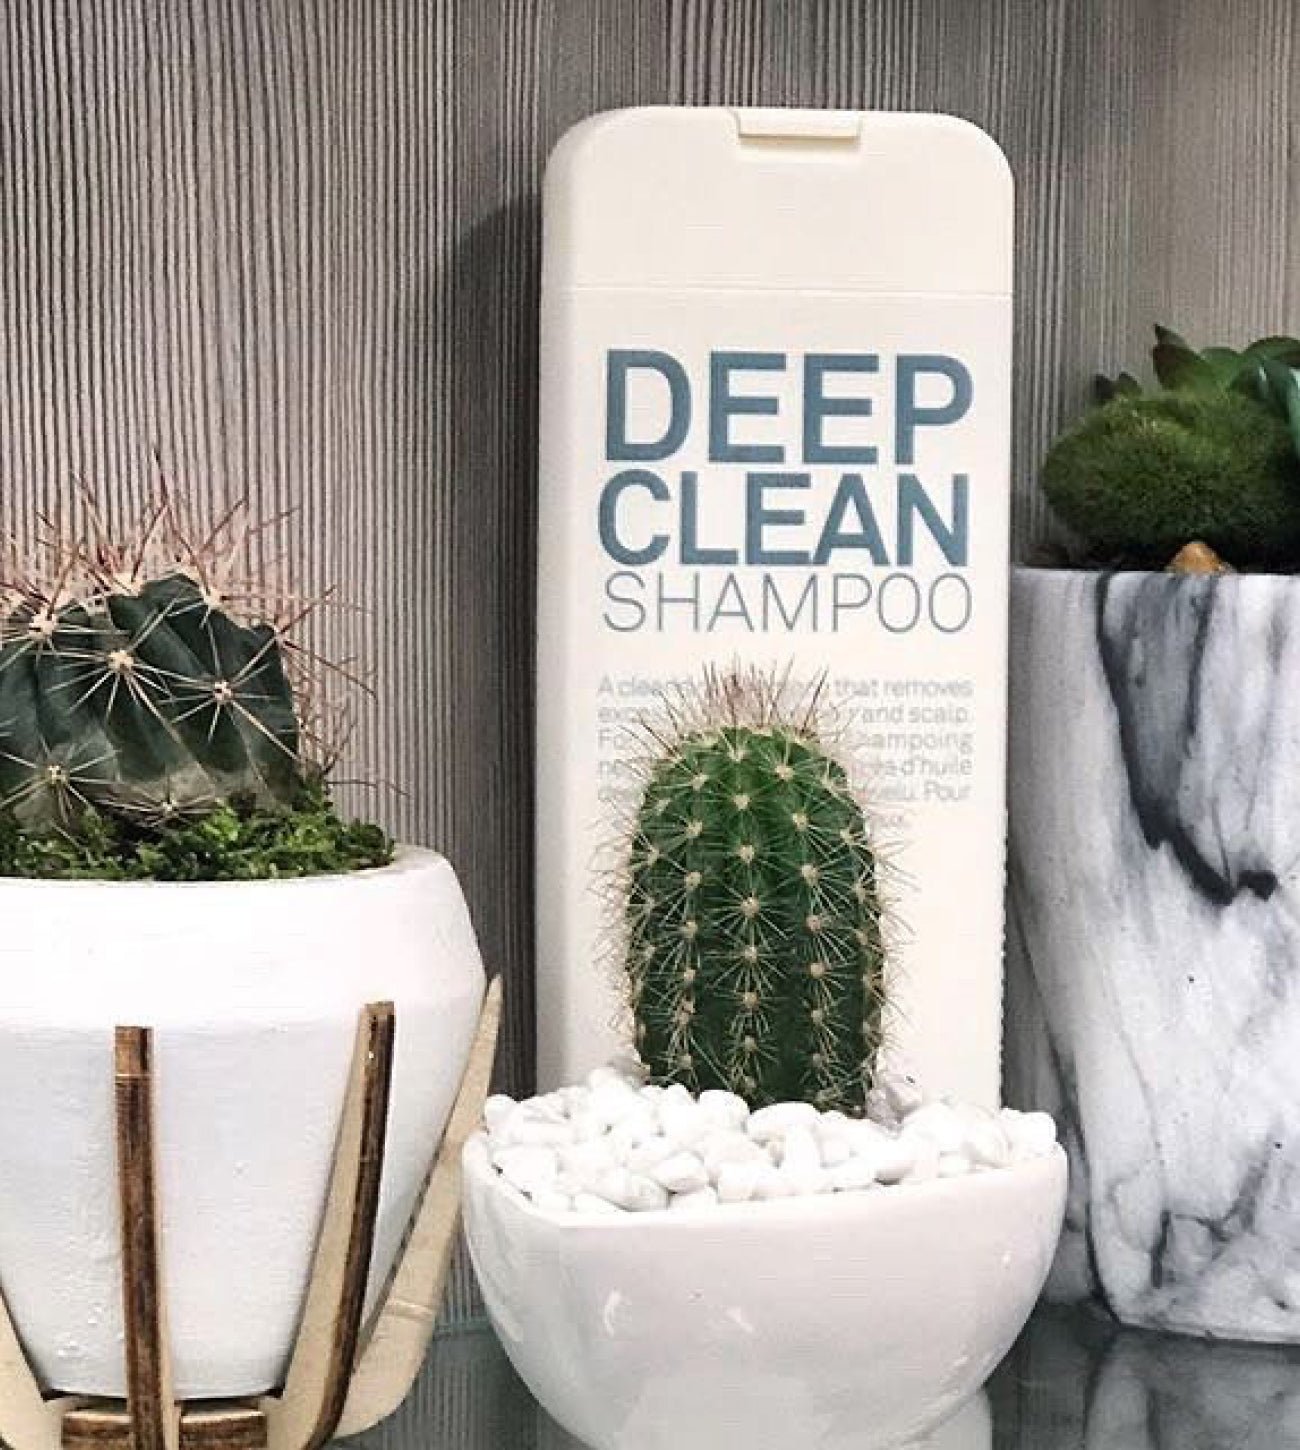 ELEVEN Australia Deep Clean Shampoo - Blend Box